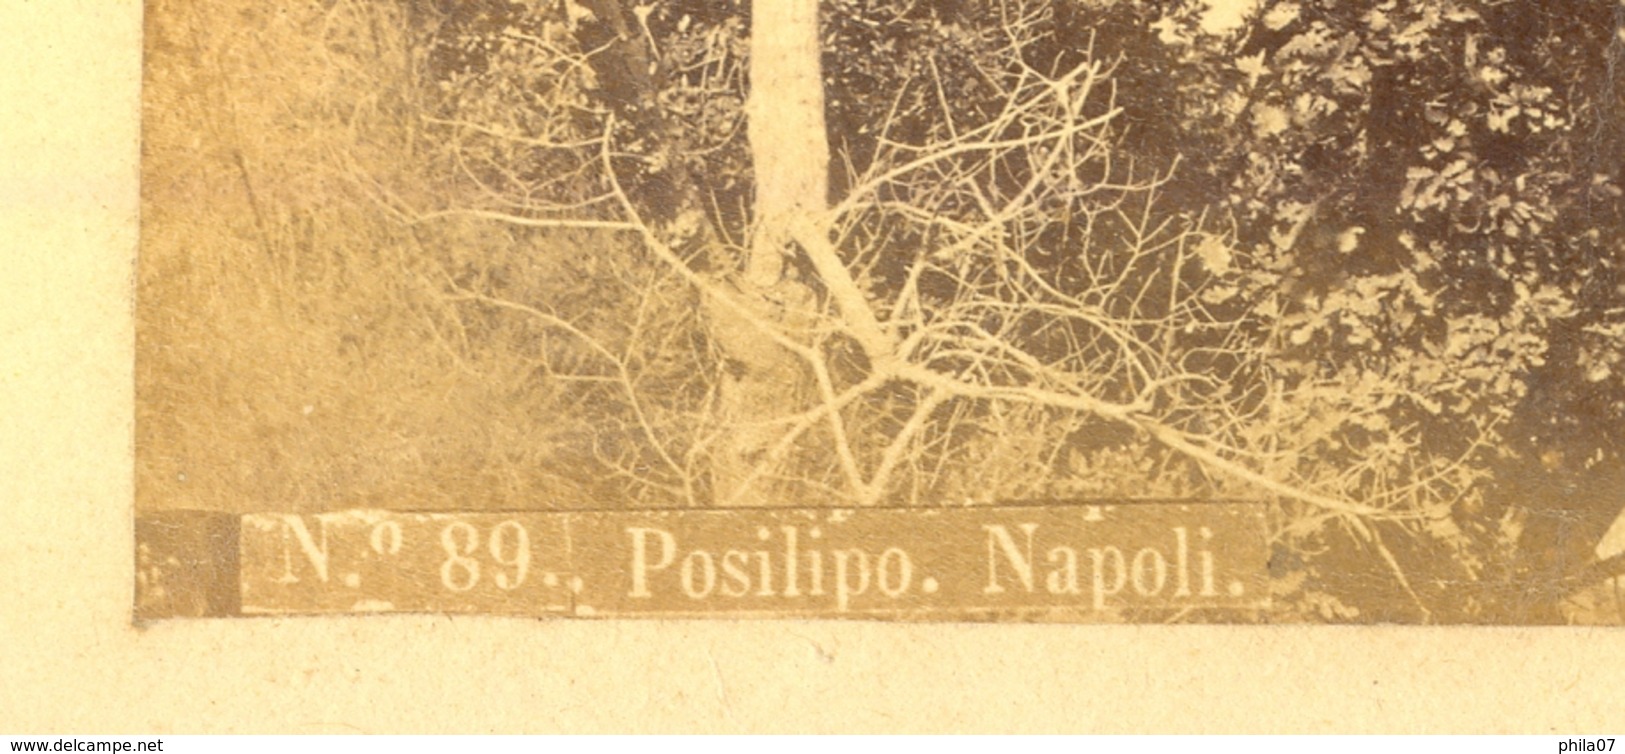 Italy - No. 89, Posilipo Napoli, Photo Dimension Cca 25,6x20 Cm / 3 Scans - Anciennes (Av. 1900)